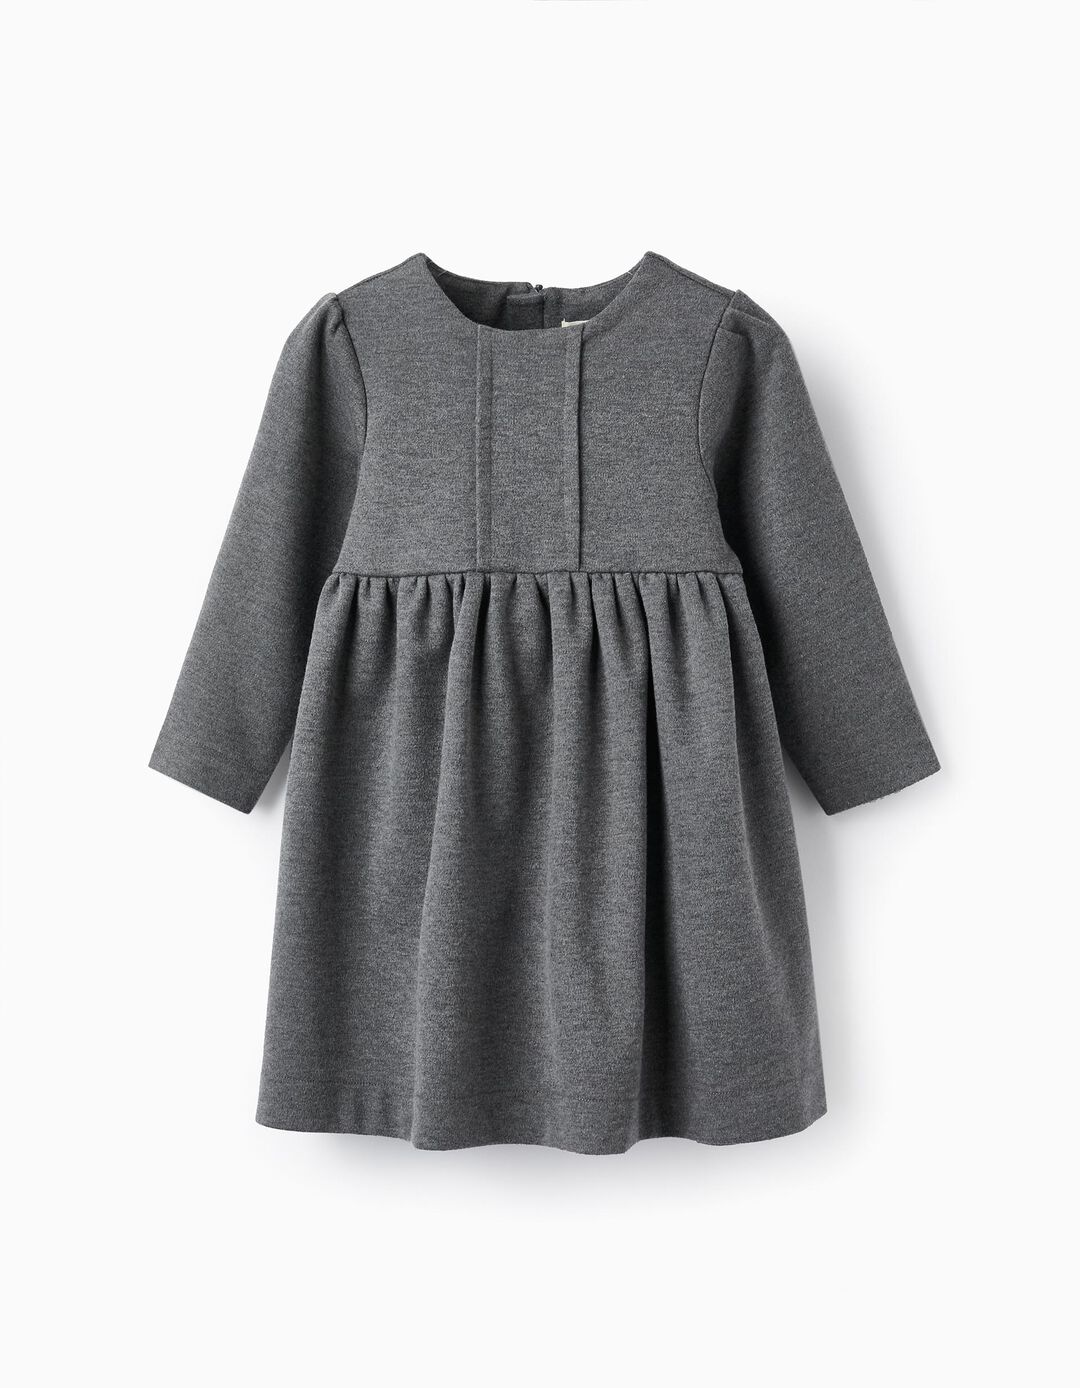 Interlock Knit Dress for Baby Girls, Grey